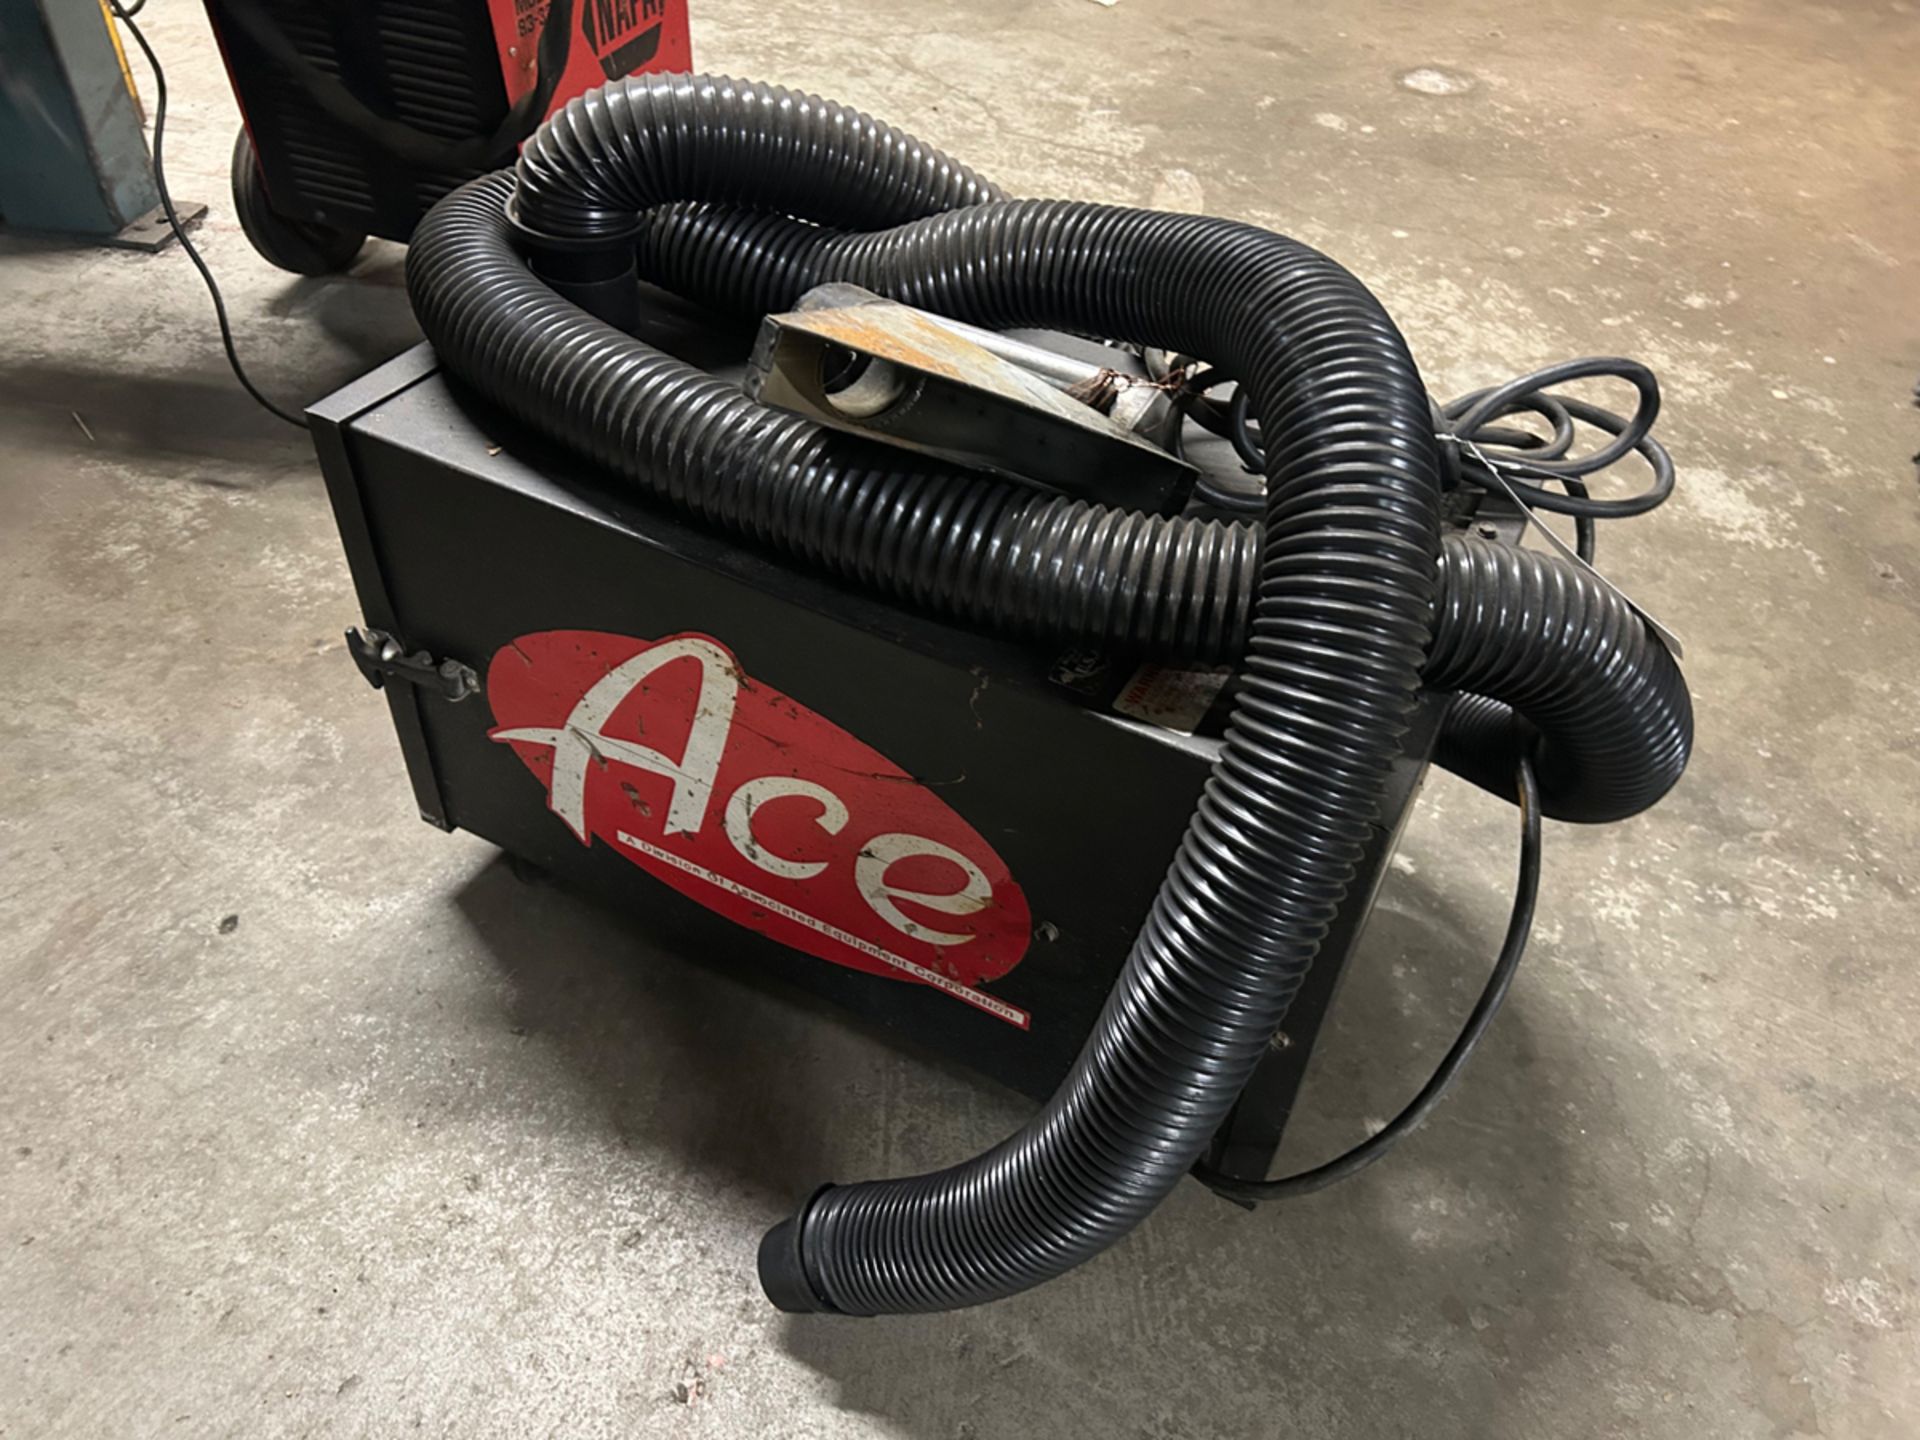 Ace model 23-200g Welding Fume Extractor - Image 2 of 3